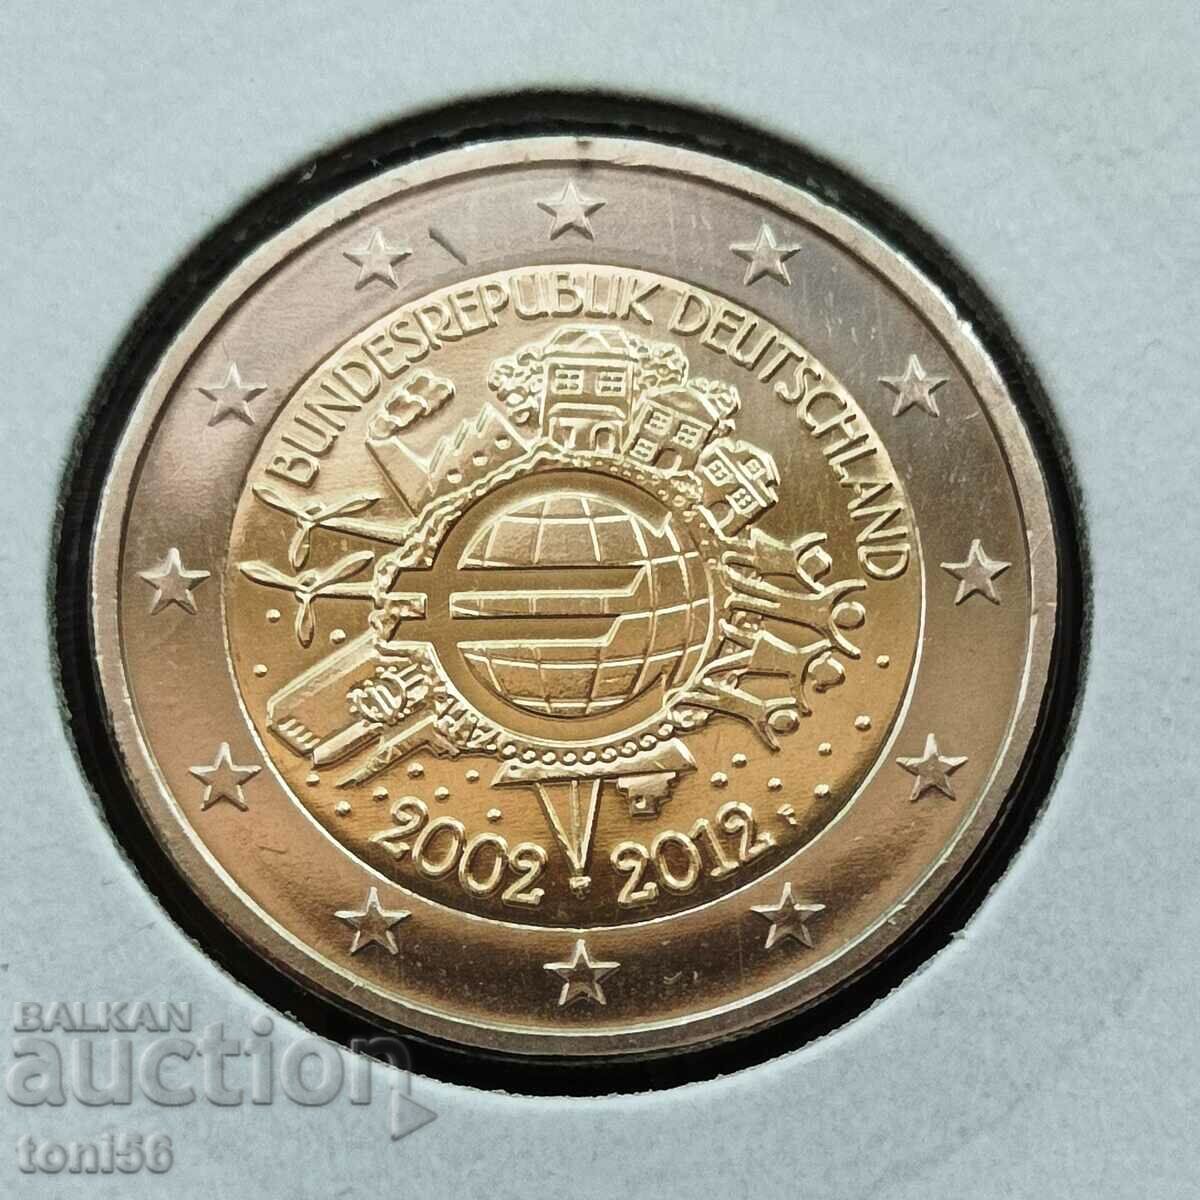 Германия 2 евро 2012 F - 10 г "Евромонети и банкноти"